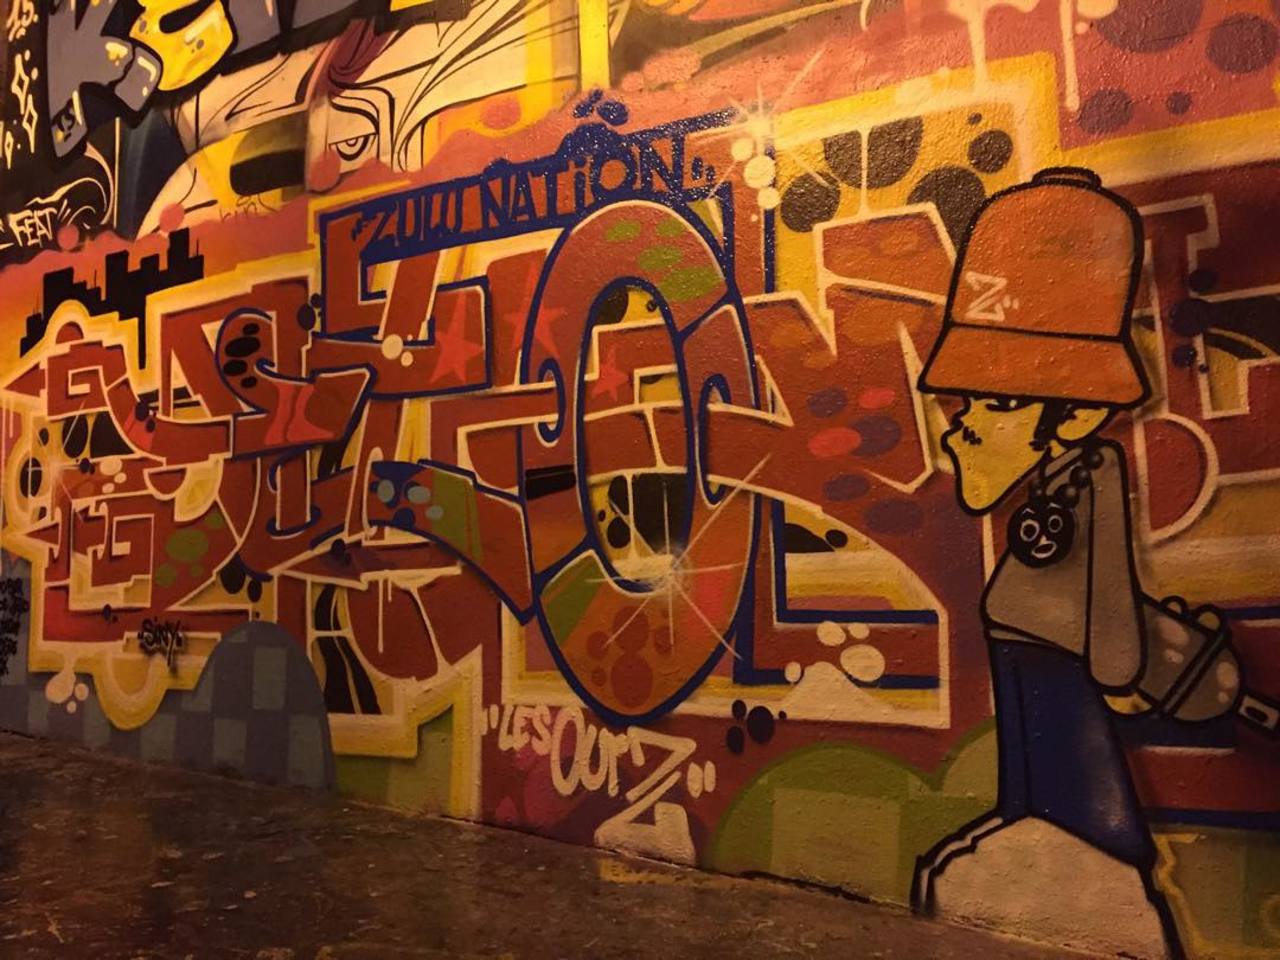 http://ift.tt/1KiqpQt #Paris #graffiti photo by wouye http://ift.tt/1VY2AWT #StreetArt http://t.co/KGlw3T9Y92